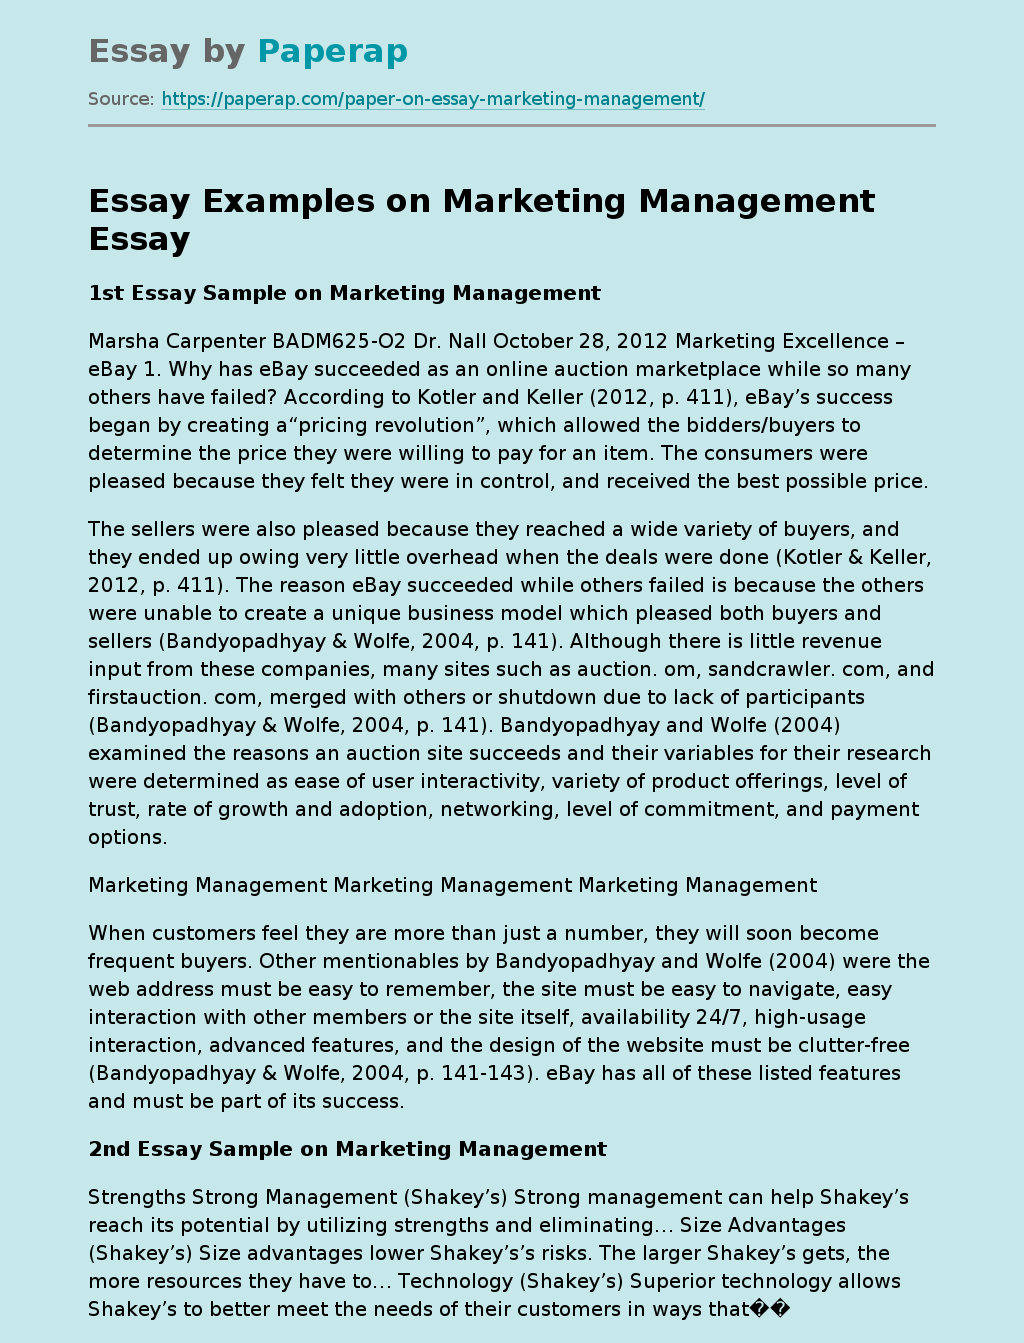 Marketing Management eBay